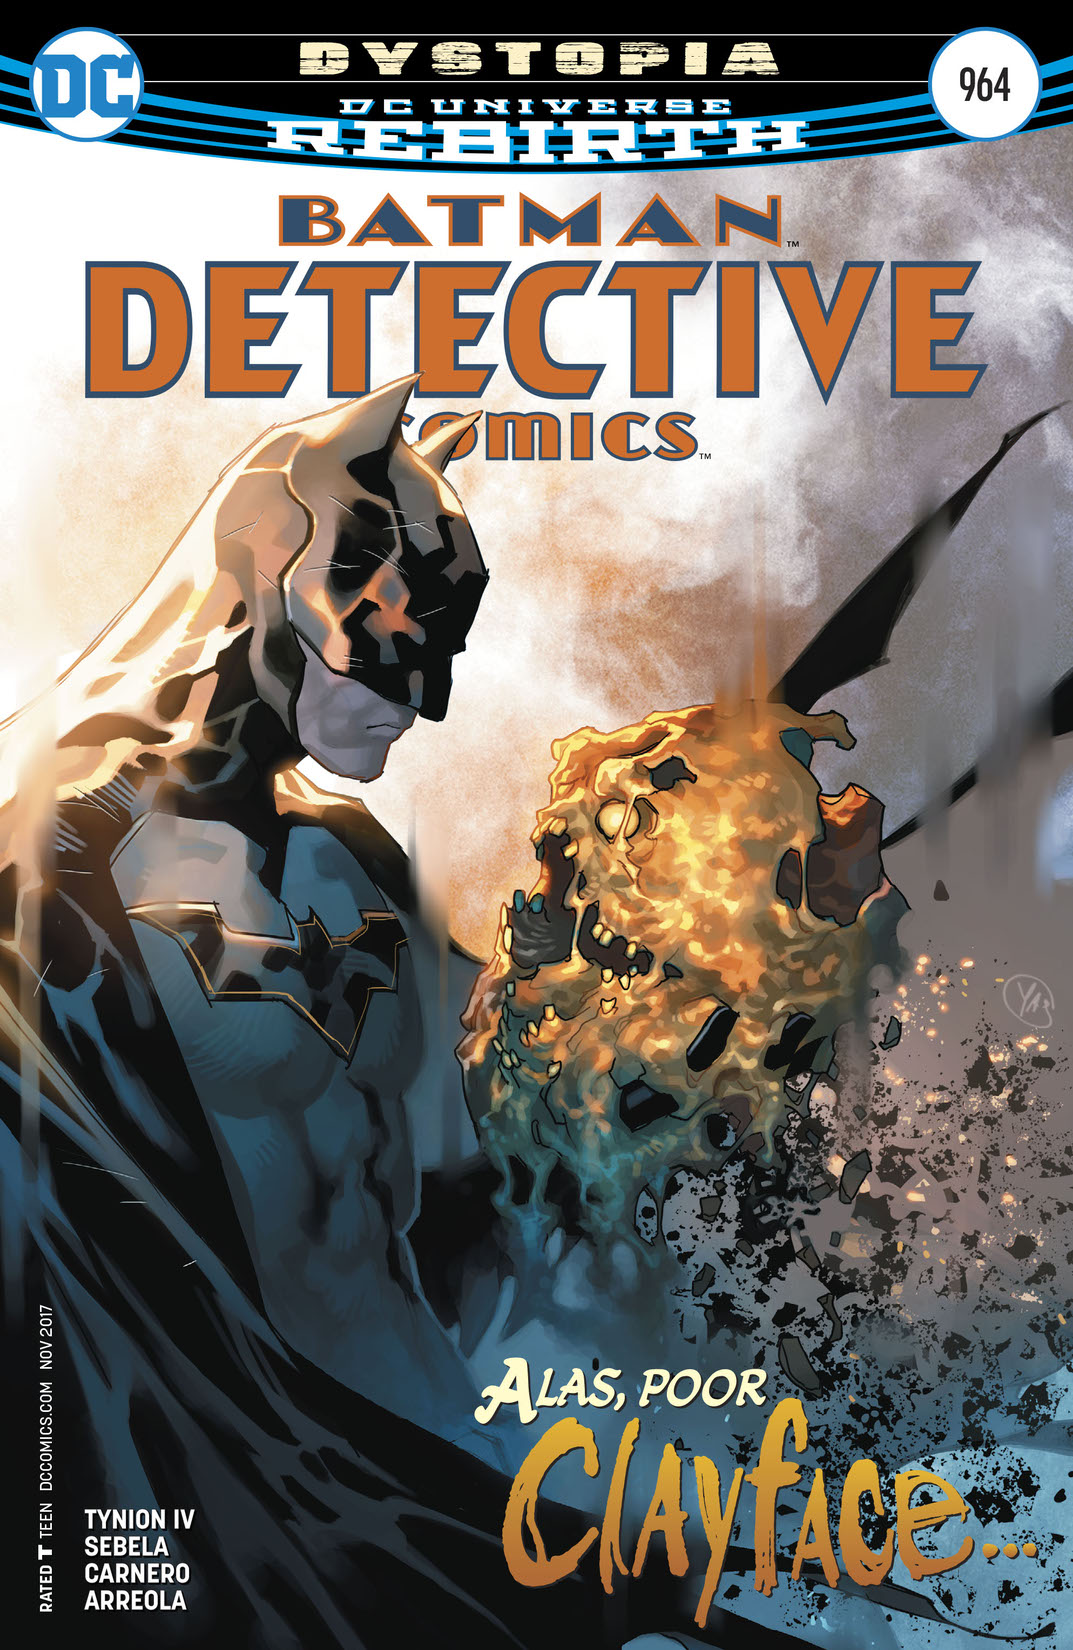 Detective Comics (2016-) #964 preview images